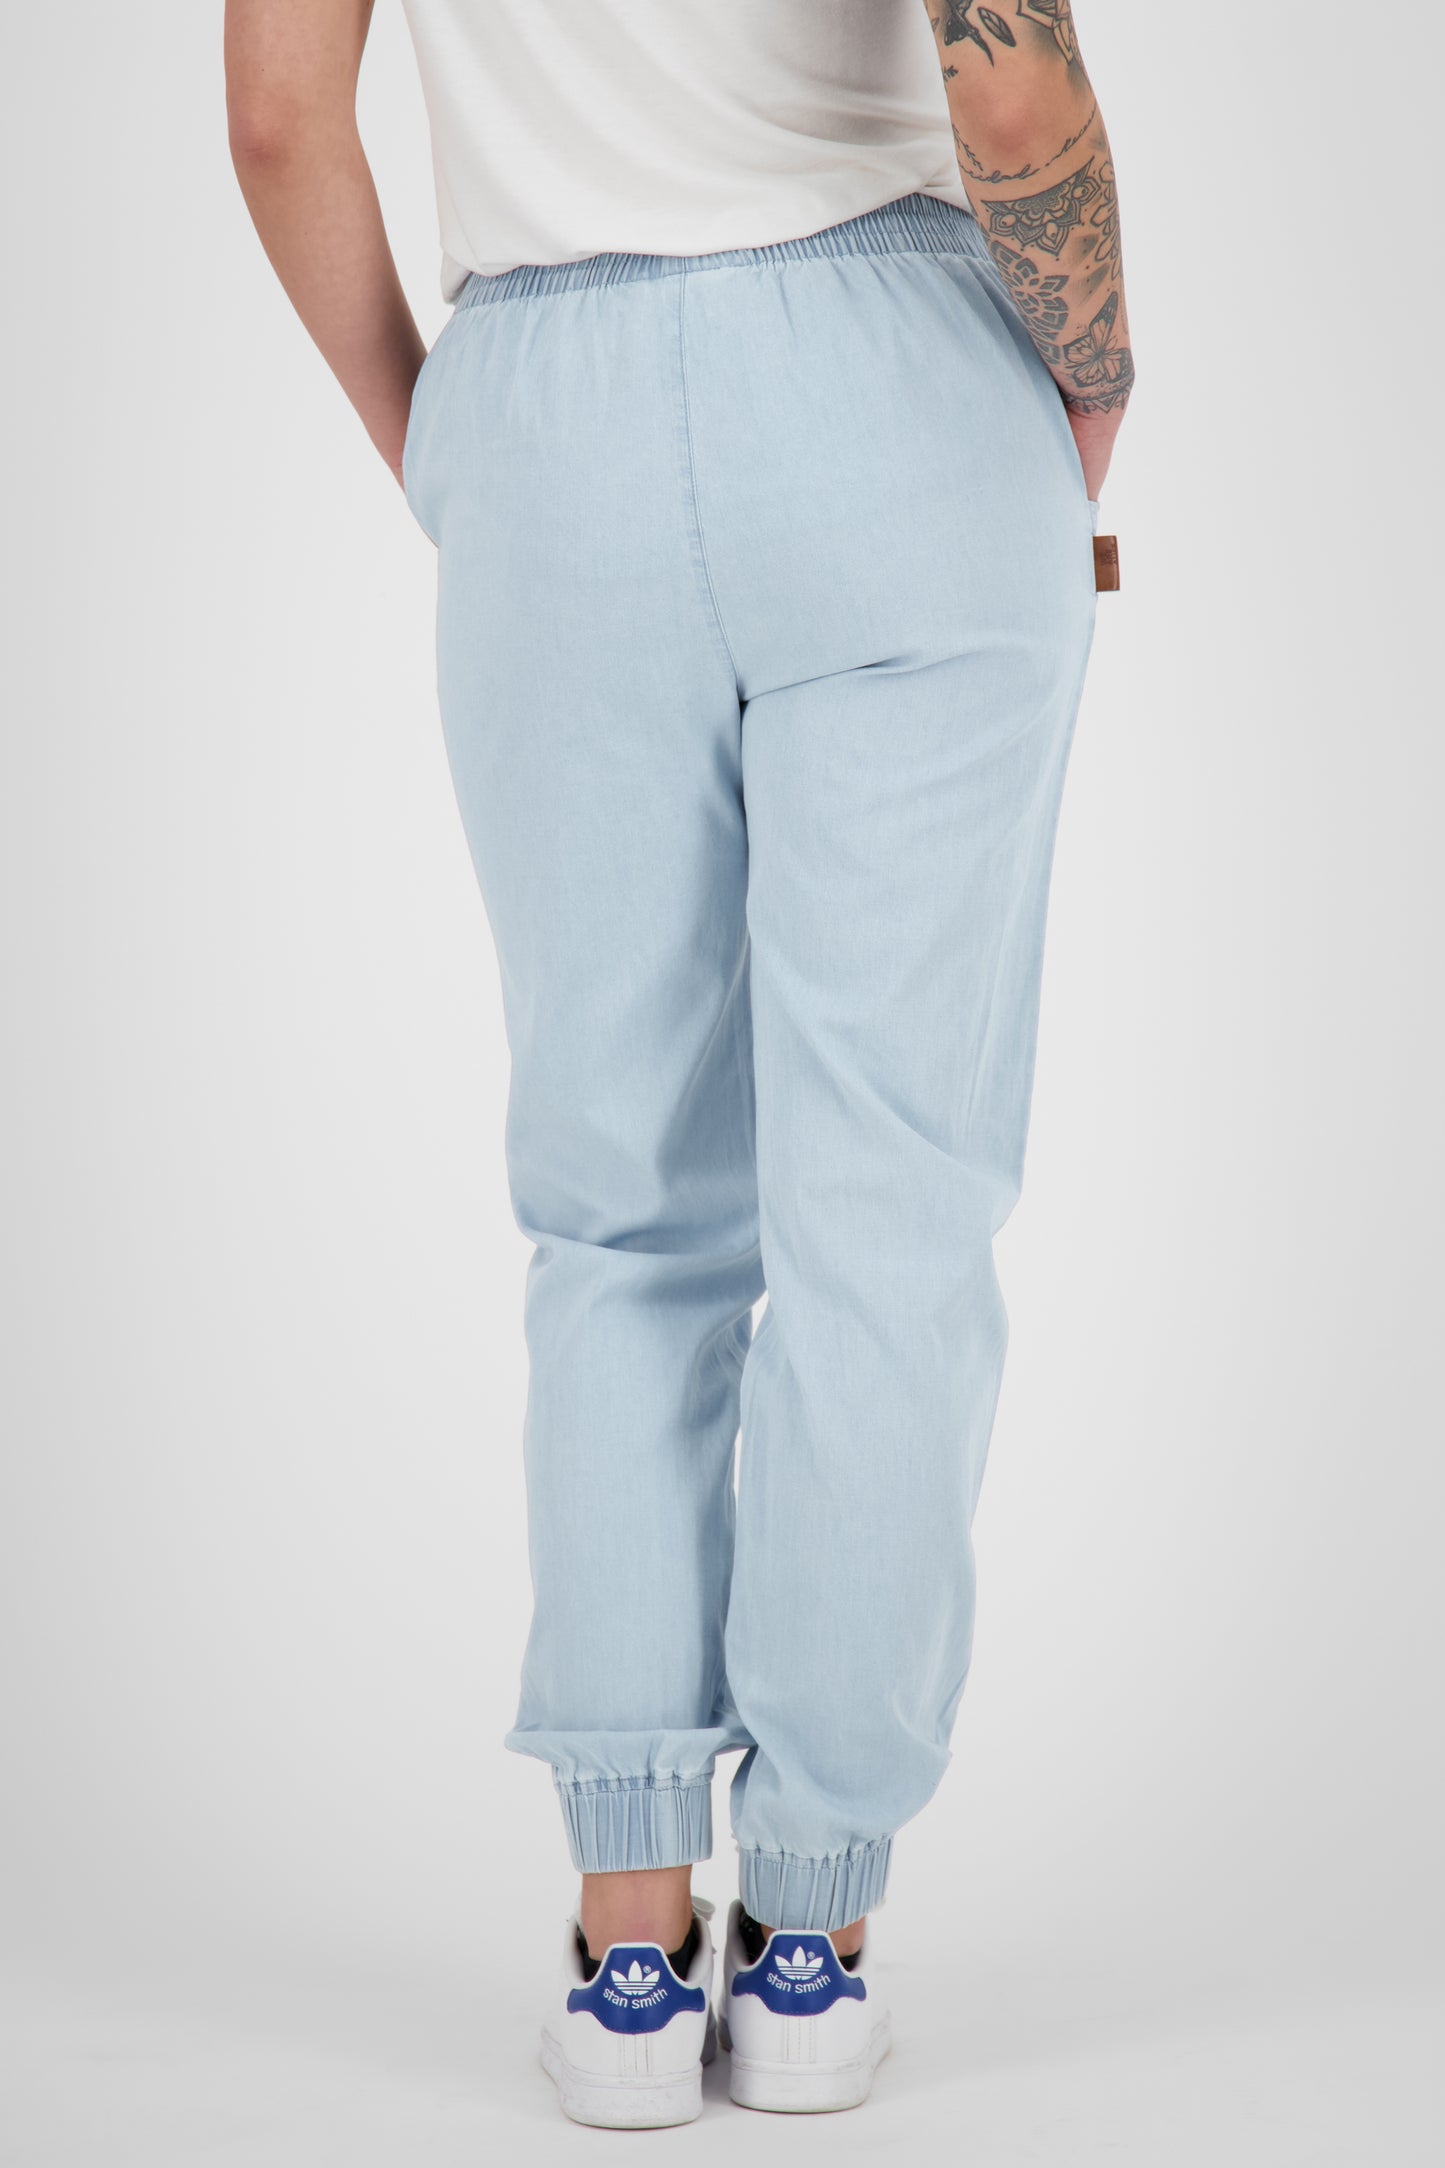 AliciaAK DNM A - Bequeme Damenhose mit individuellem Look Hellblau